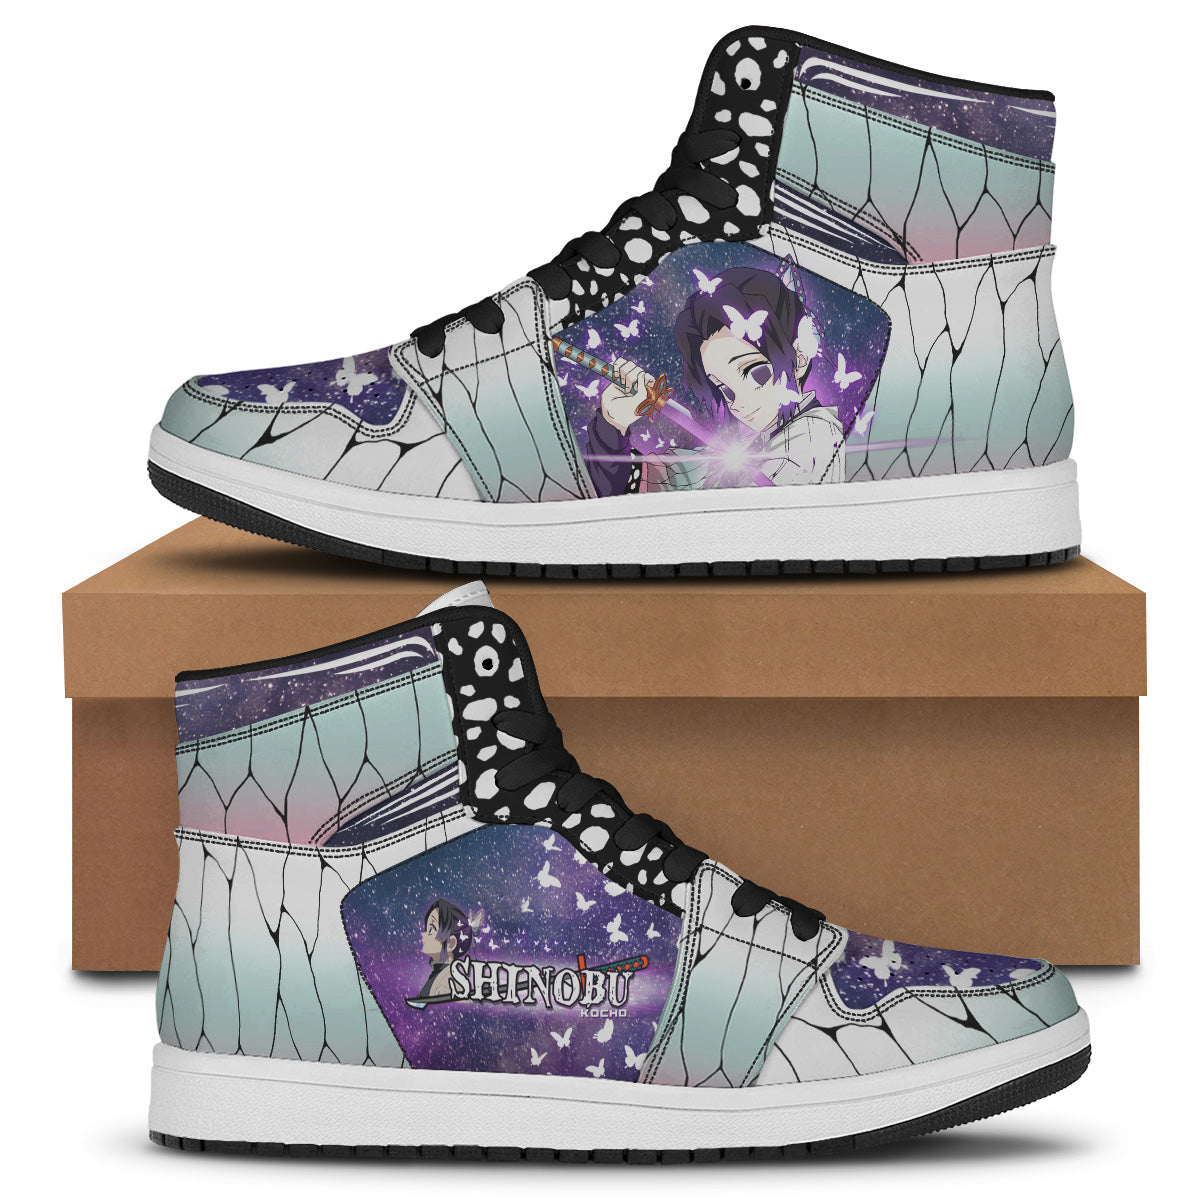 Shinobu Butterfly Air Jordan high top shoes